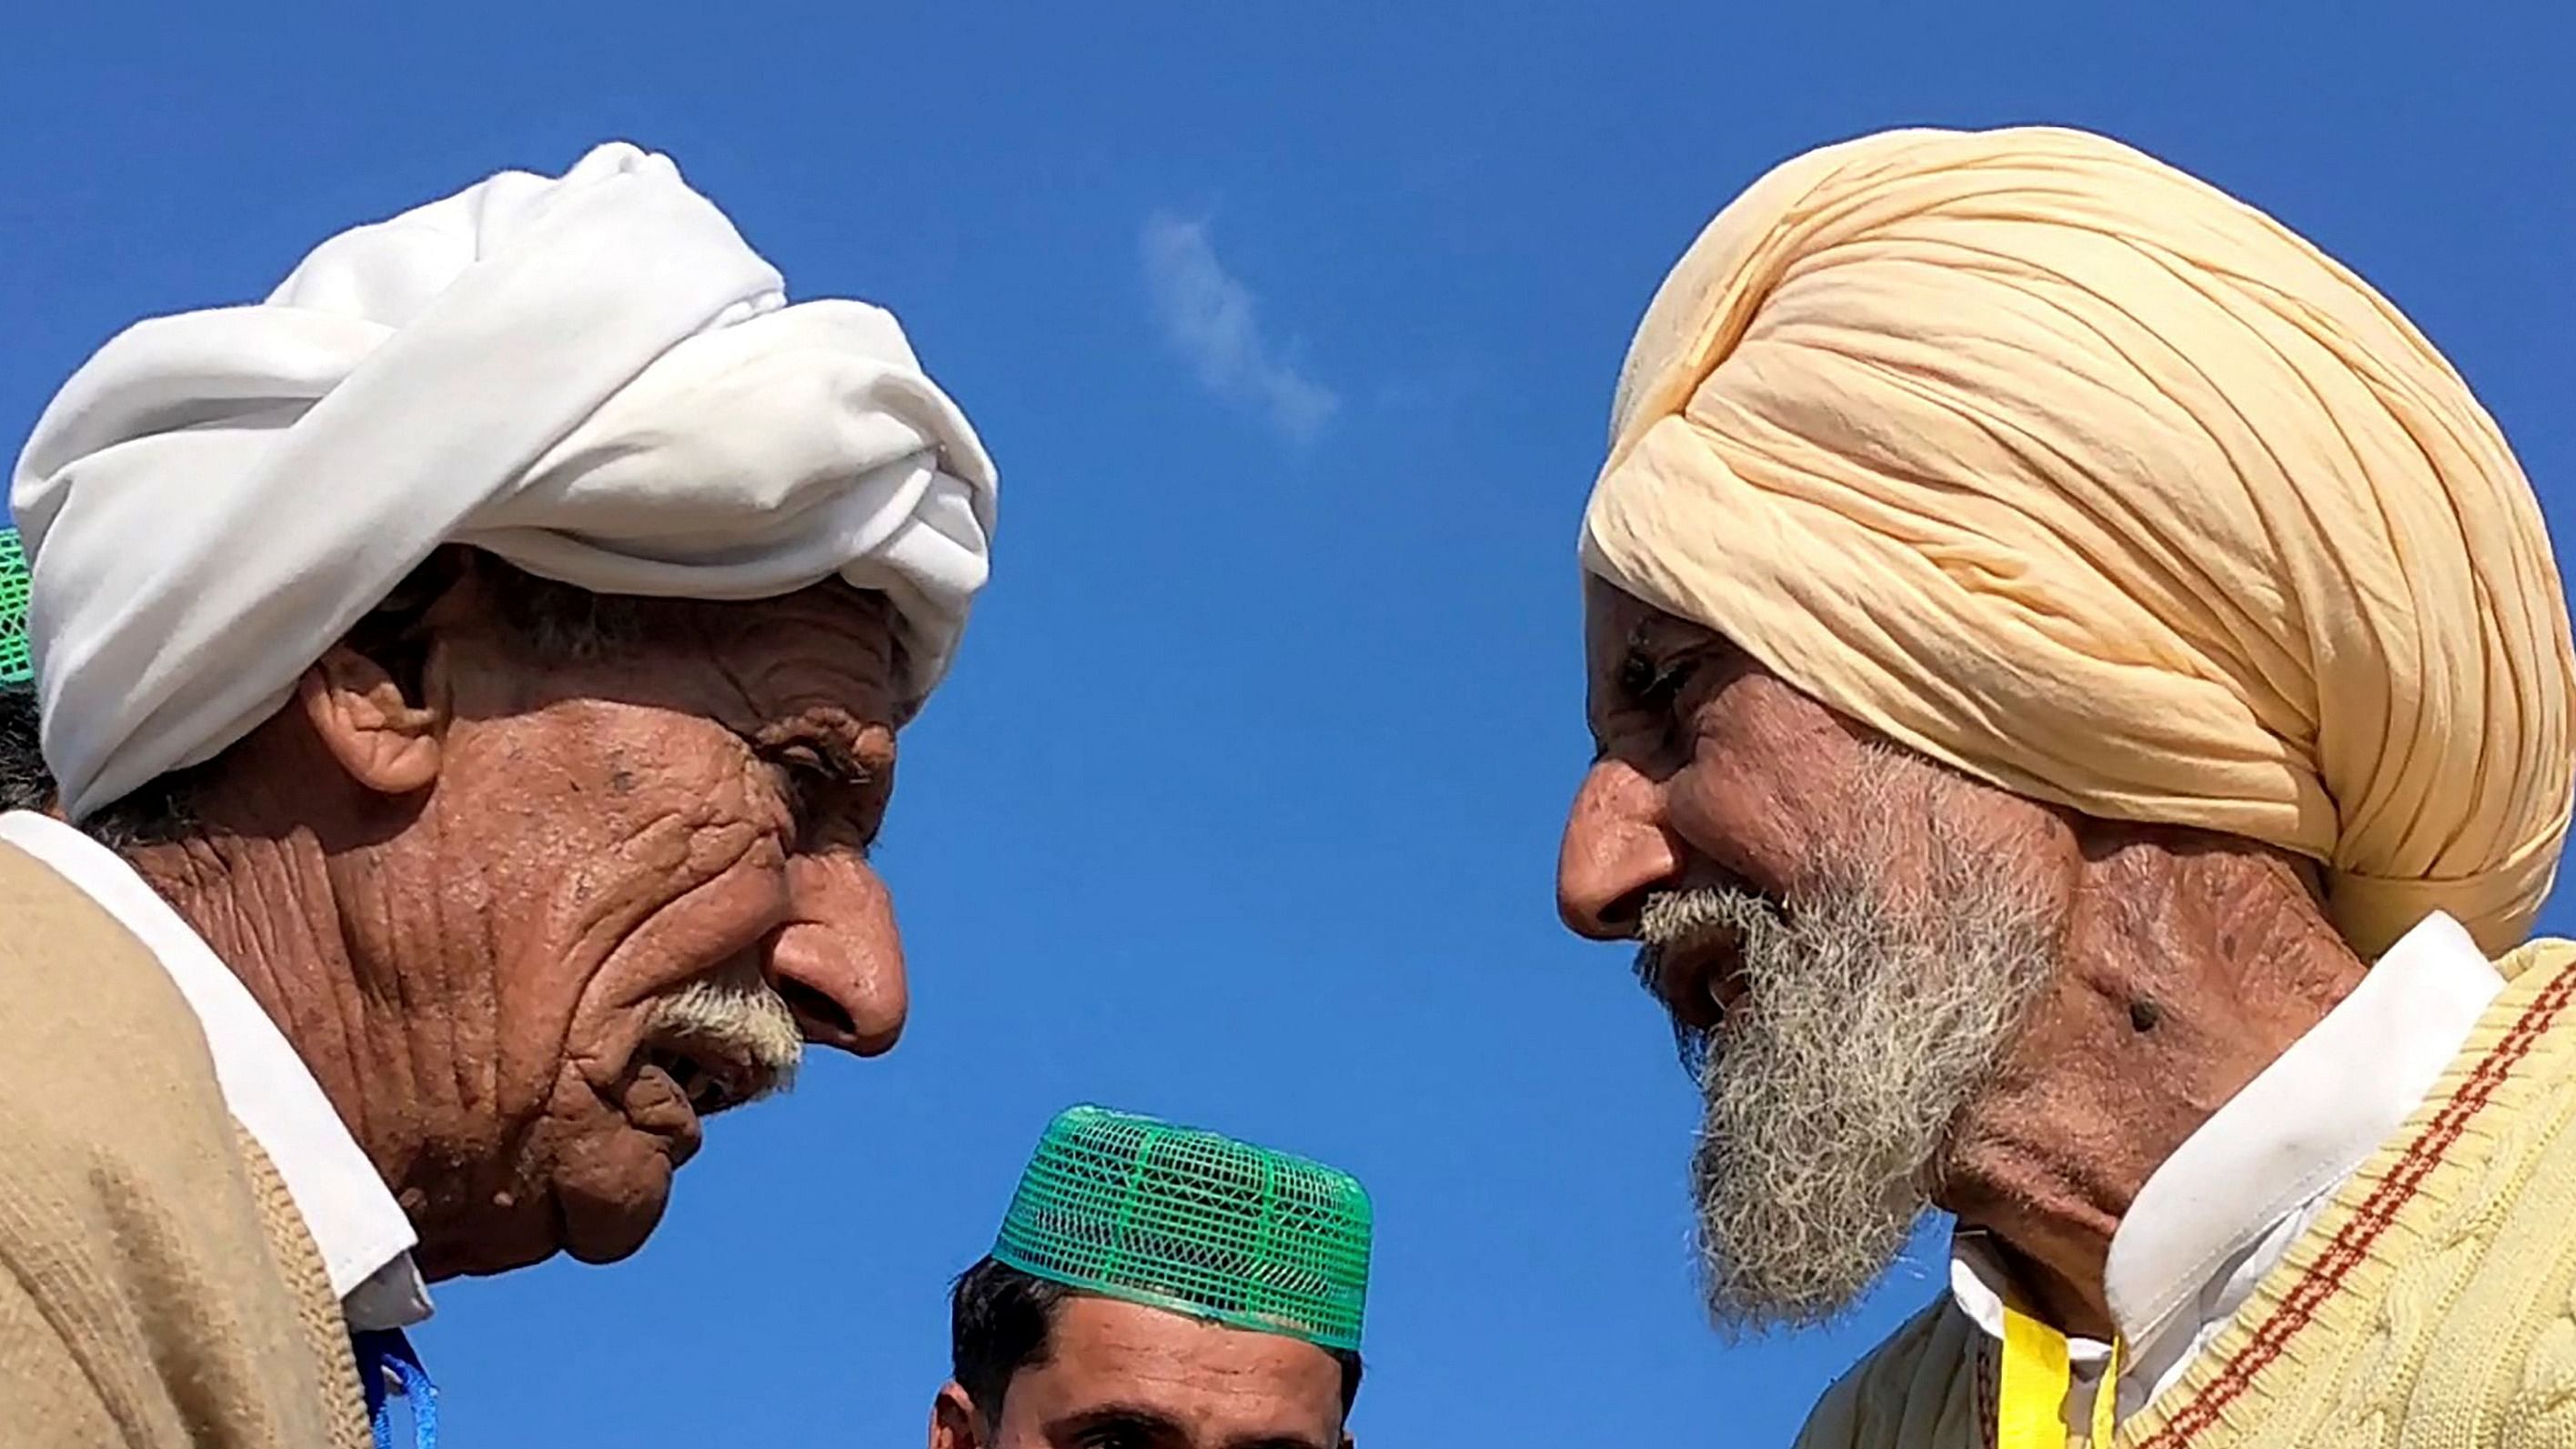  Indian Sikh labourer Sika Khan (R) speaking with his elder brother Sadiq Khan from Pakistan near the India-Pakistan border at the Kartarpur corridor. Credit: AFP Photo/Courtesy of Pakistan's Youtuber Nasir Dhillon